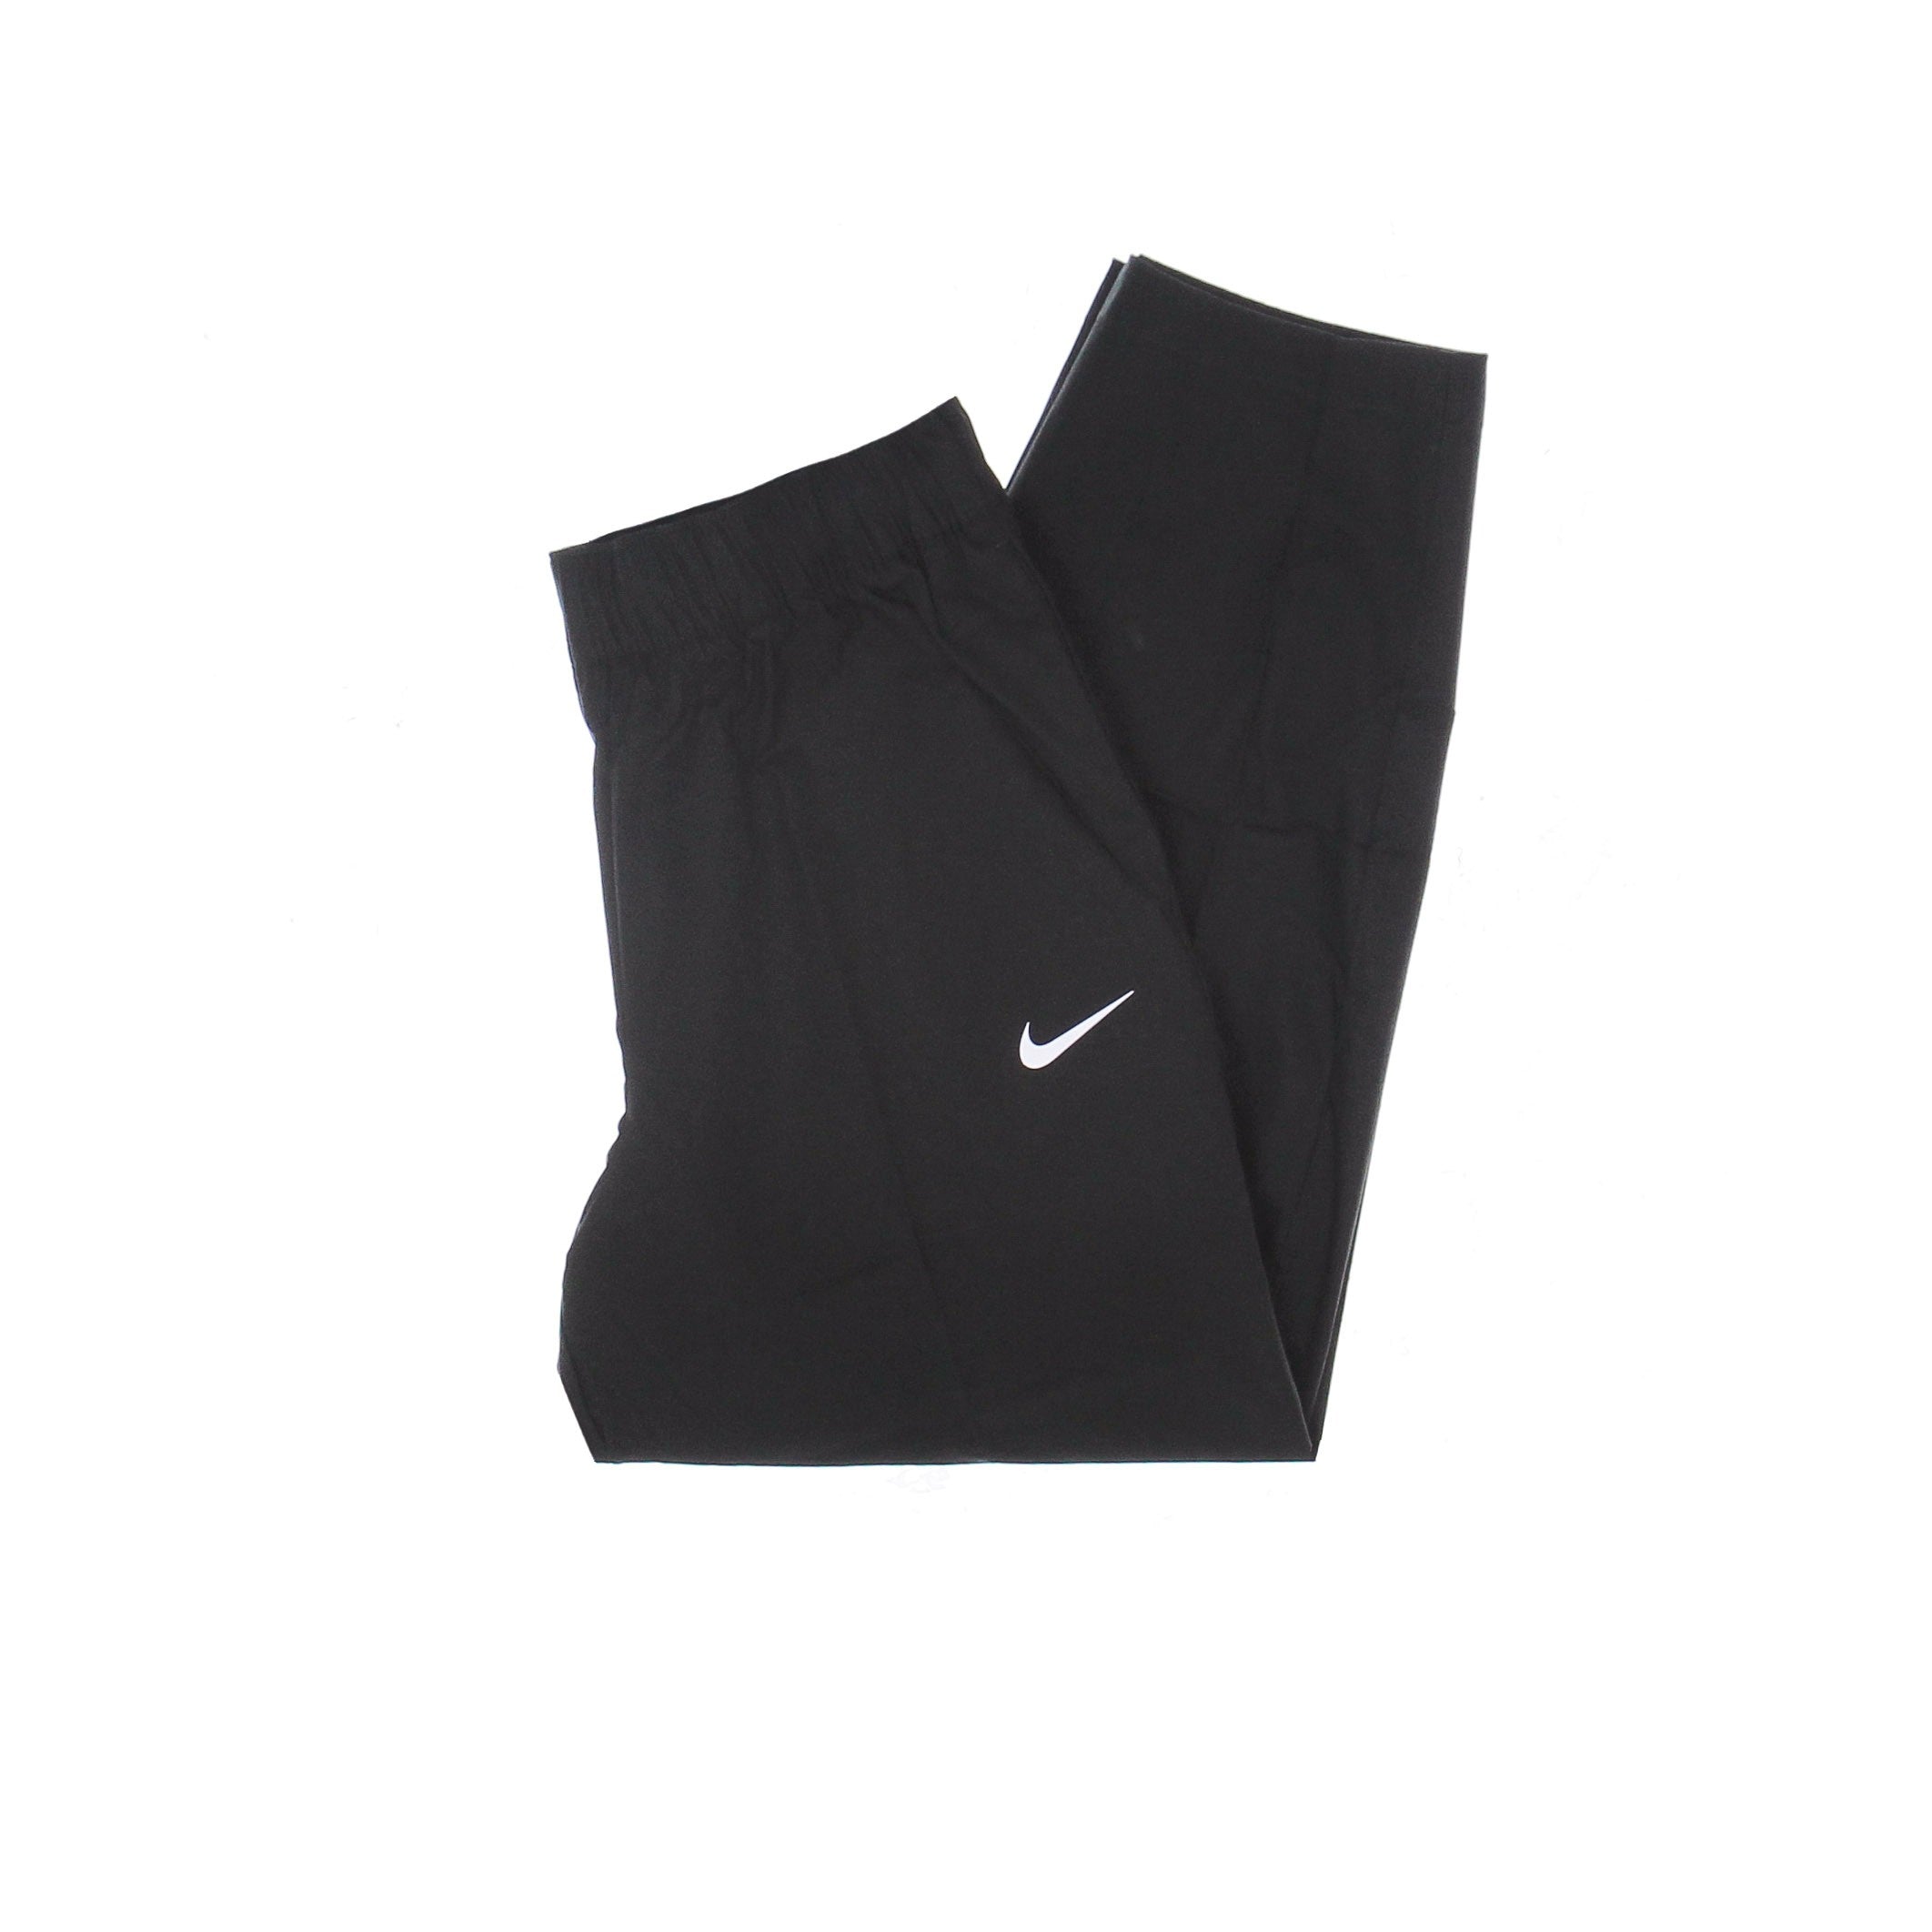 Nike, Pantalone Lungo Donna Essential Woven Hr Pant, Black/white